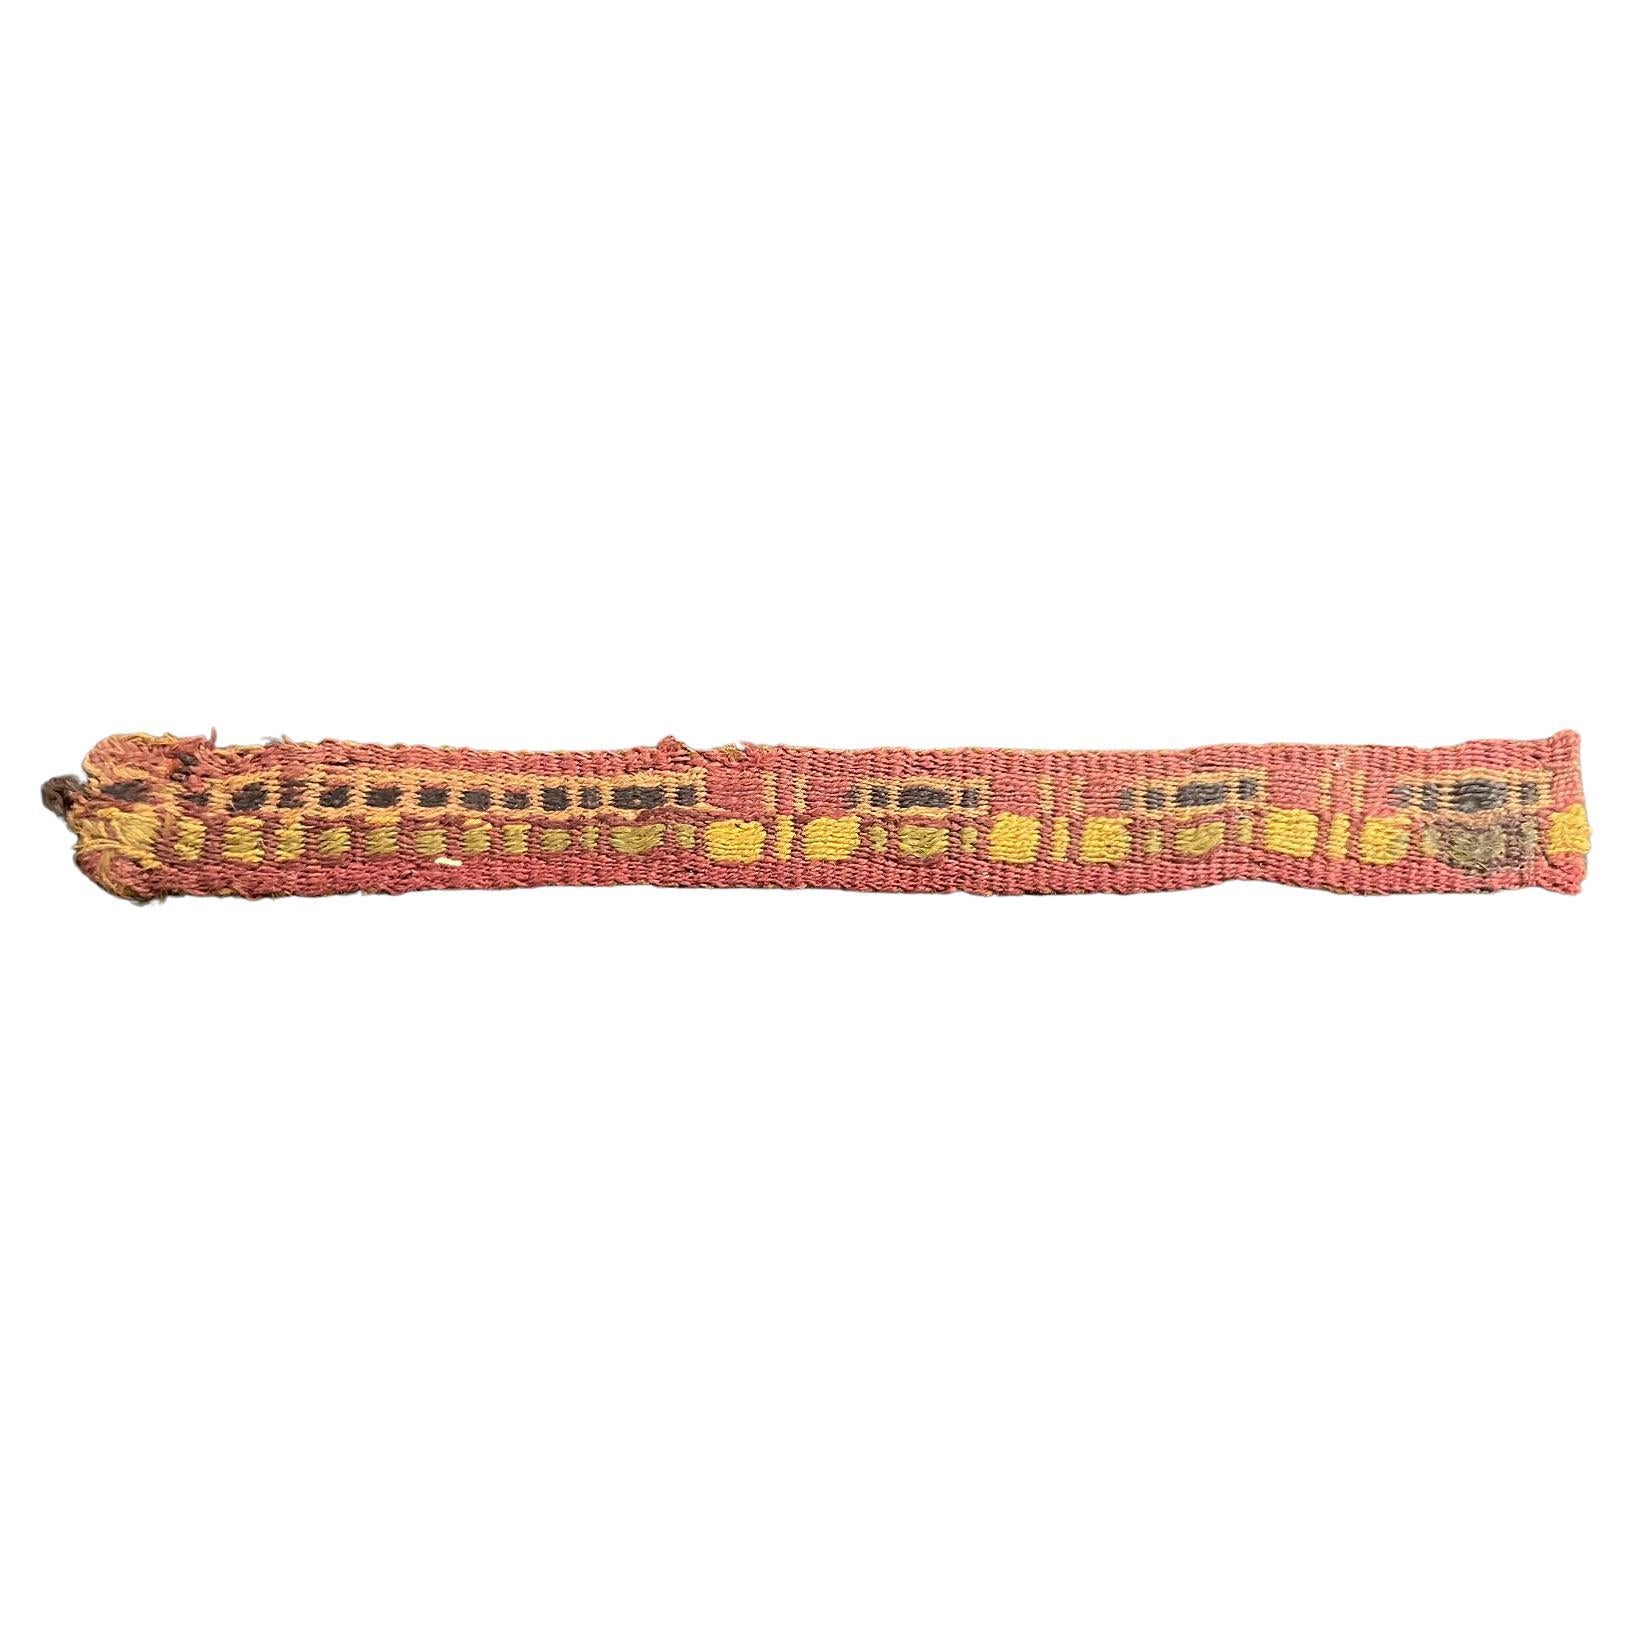 Chancay Pre-Columbian Textile Fragment, Peru ca 1100-1400 AD, Ex Ferdinand Anton